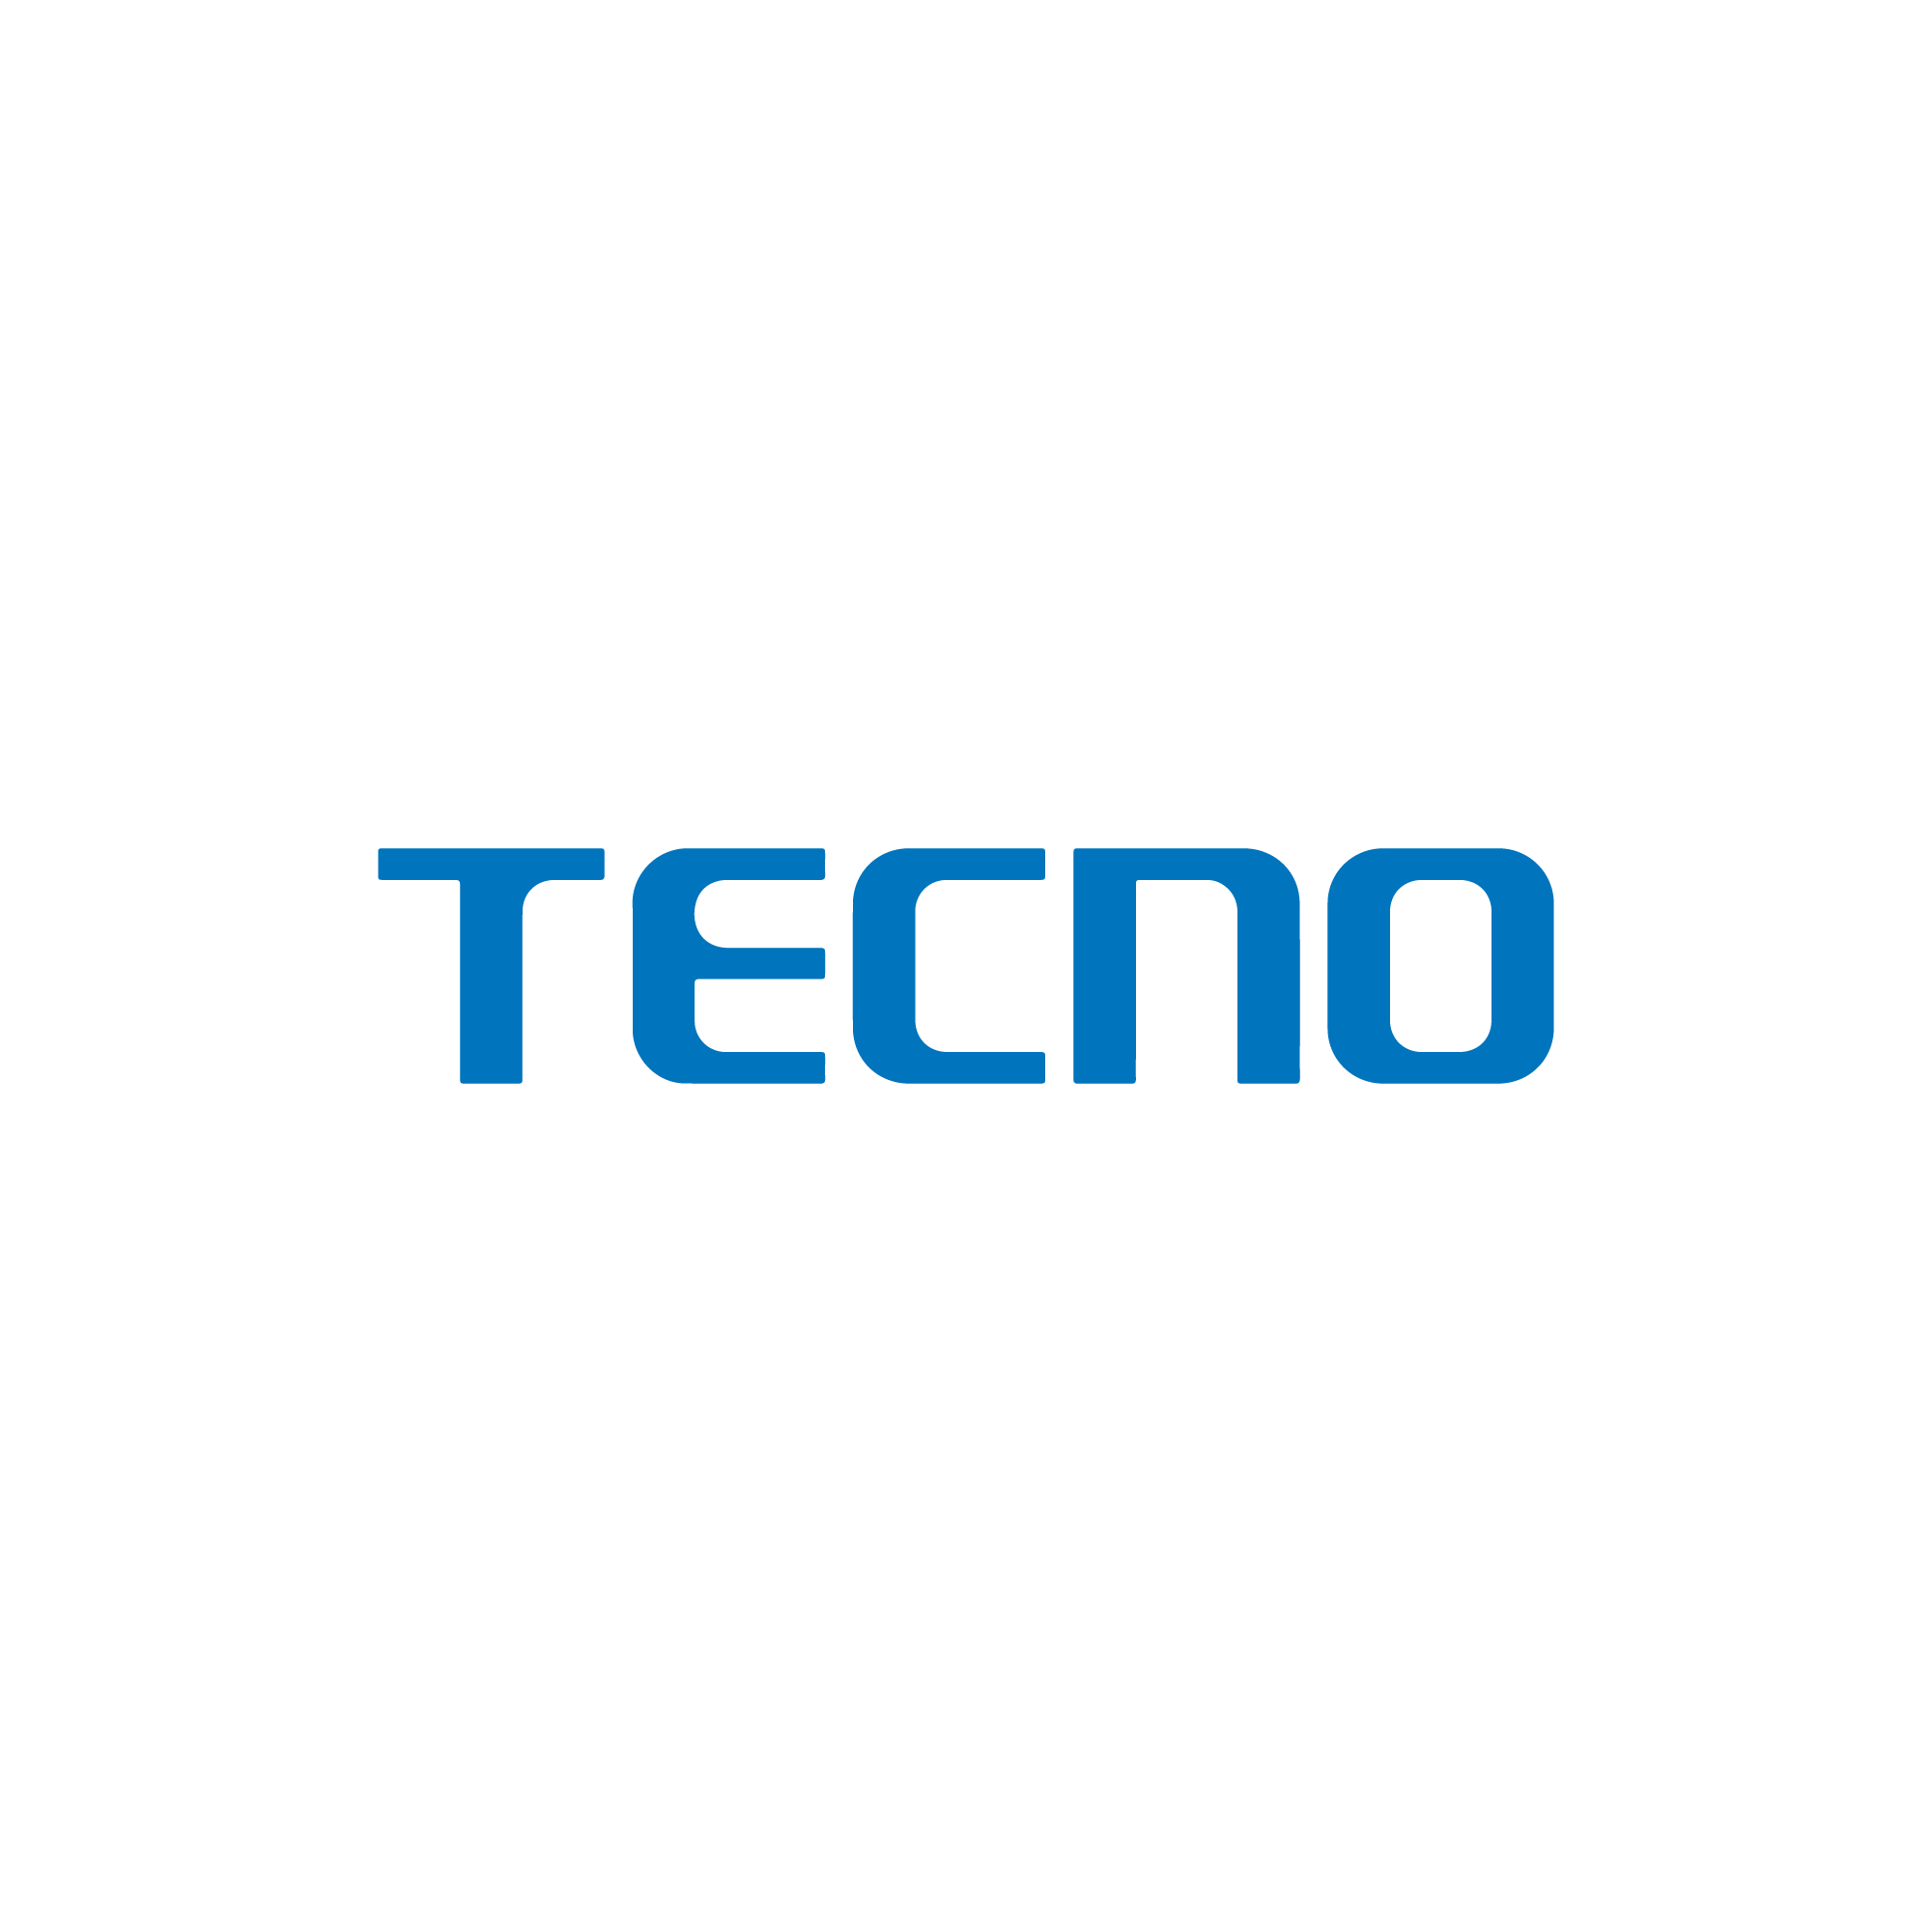 Instagram logo for a techno event : r/graphic_design